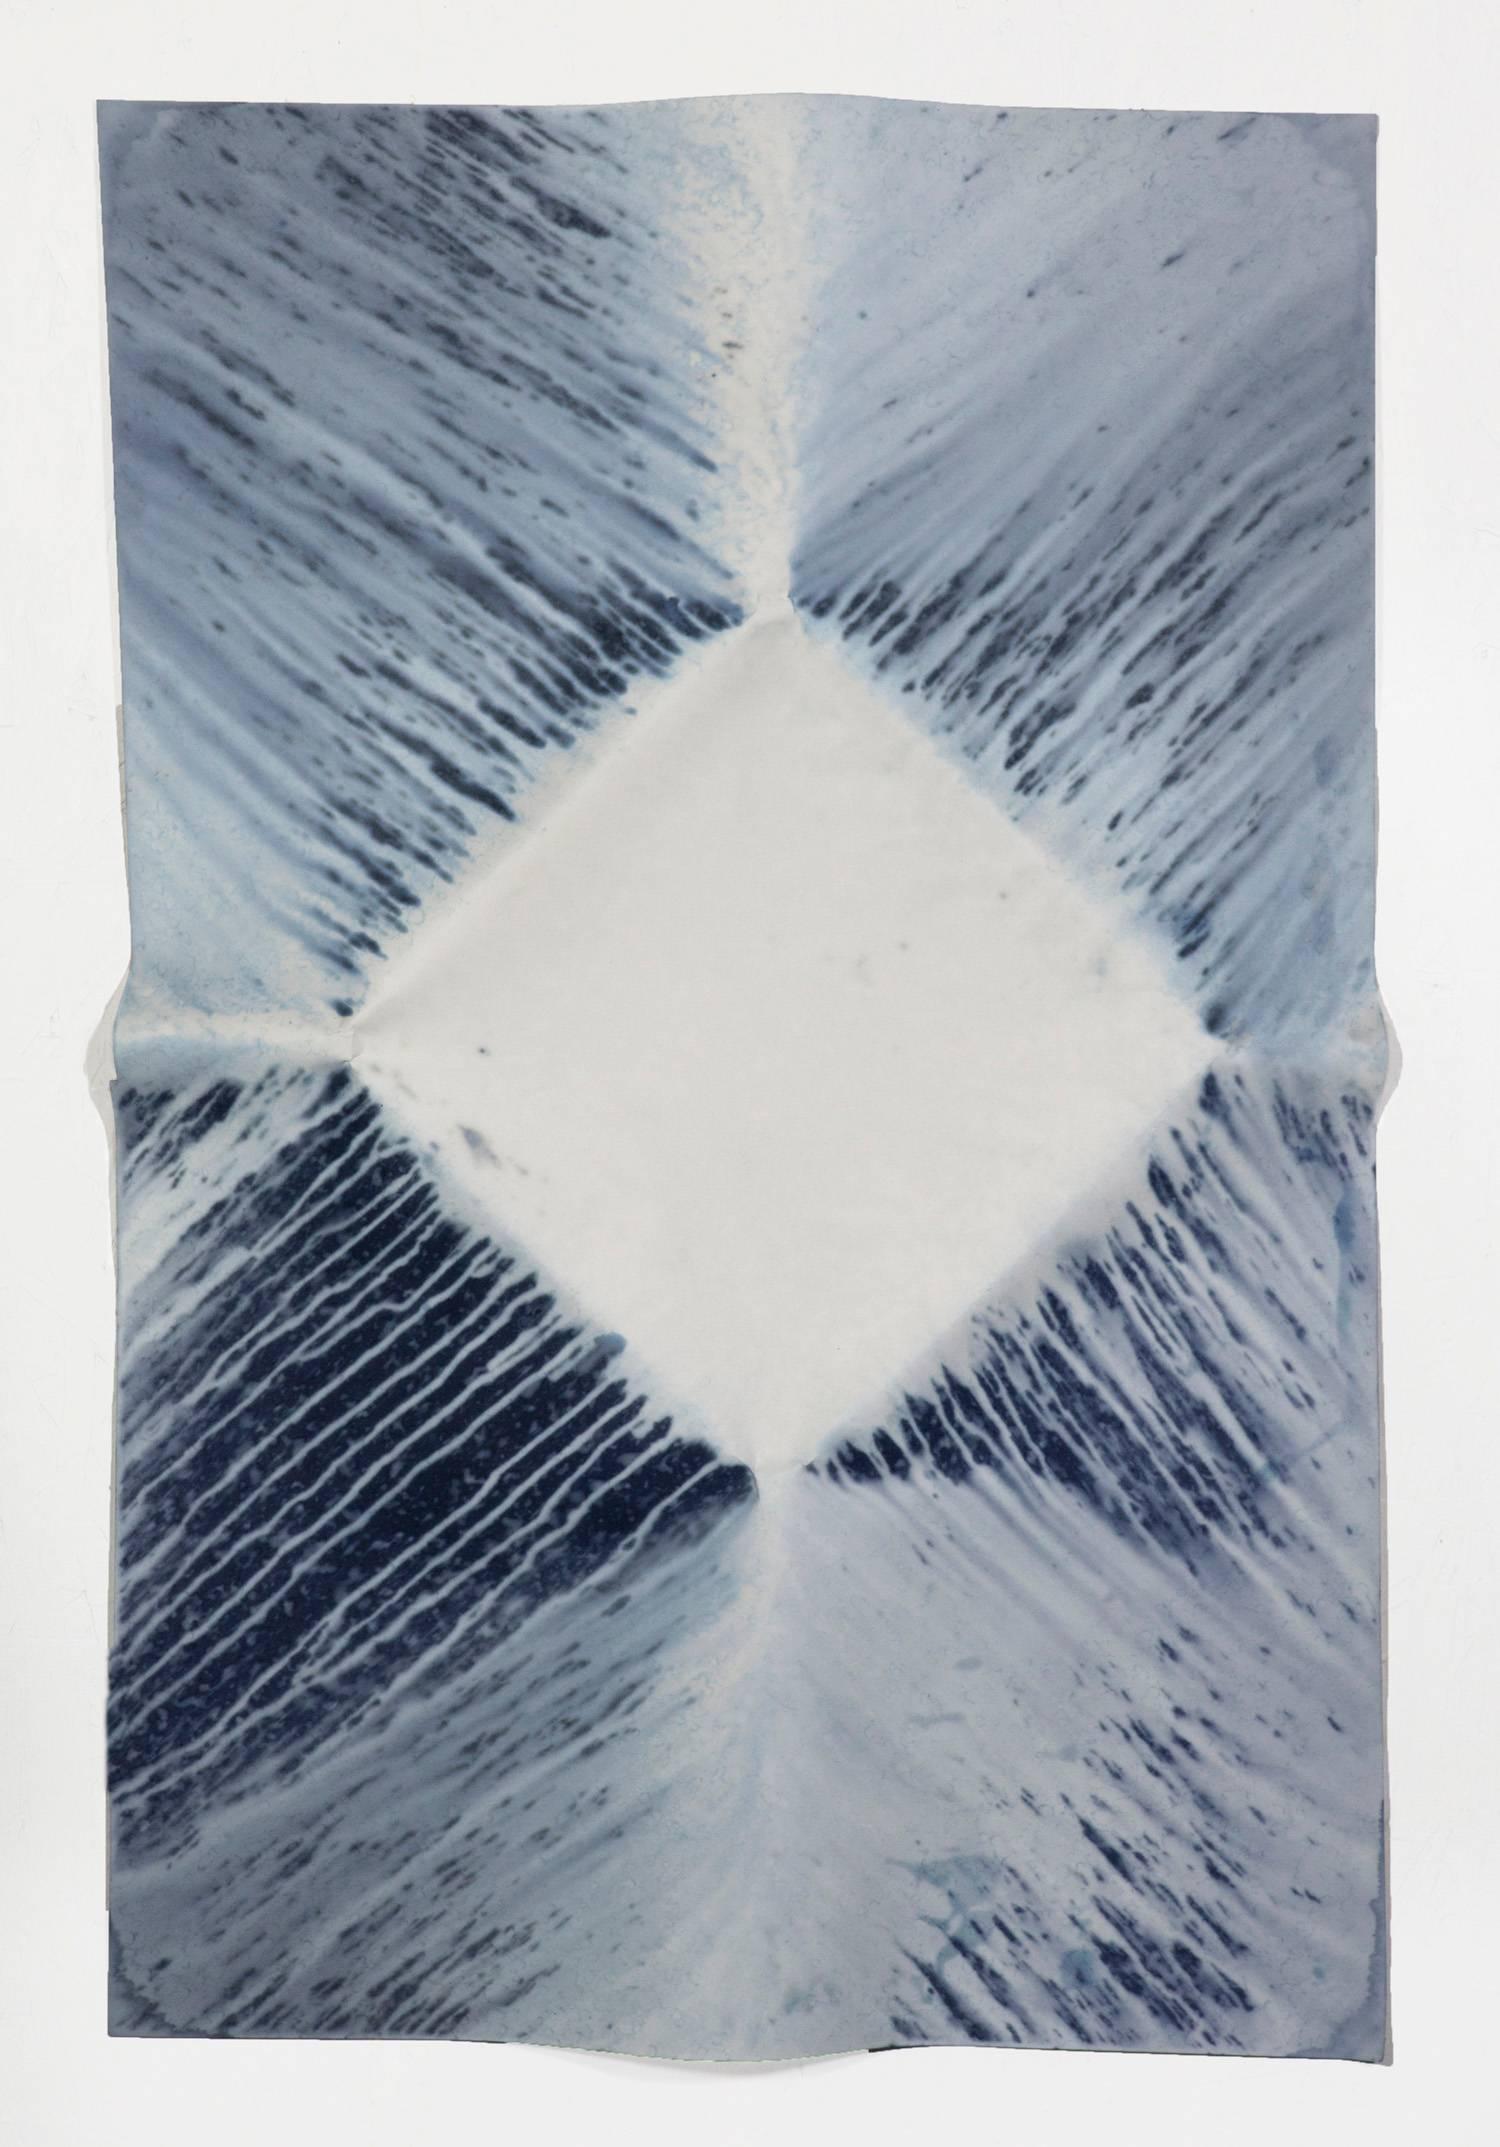 Meghann Riepenhoff Abstract Photograph - Ecotone #2 (Bainbridge Island, WA 04.27.16, Draped with Sun Showers)